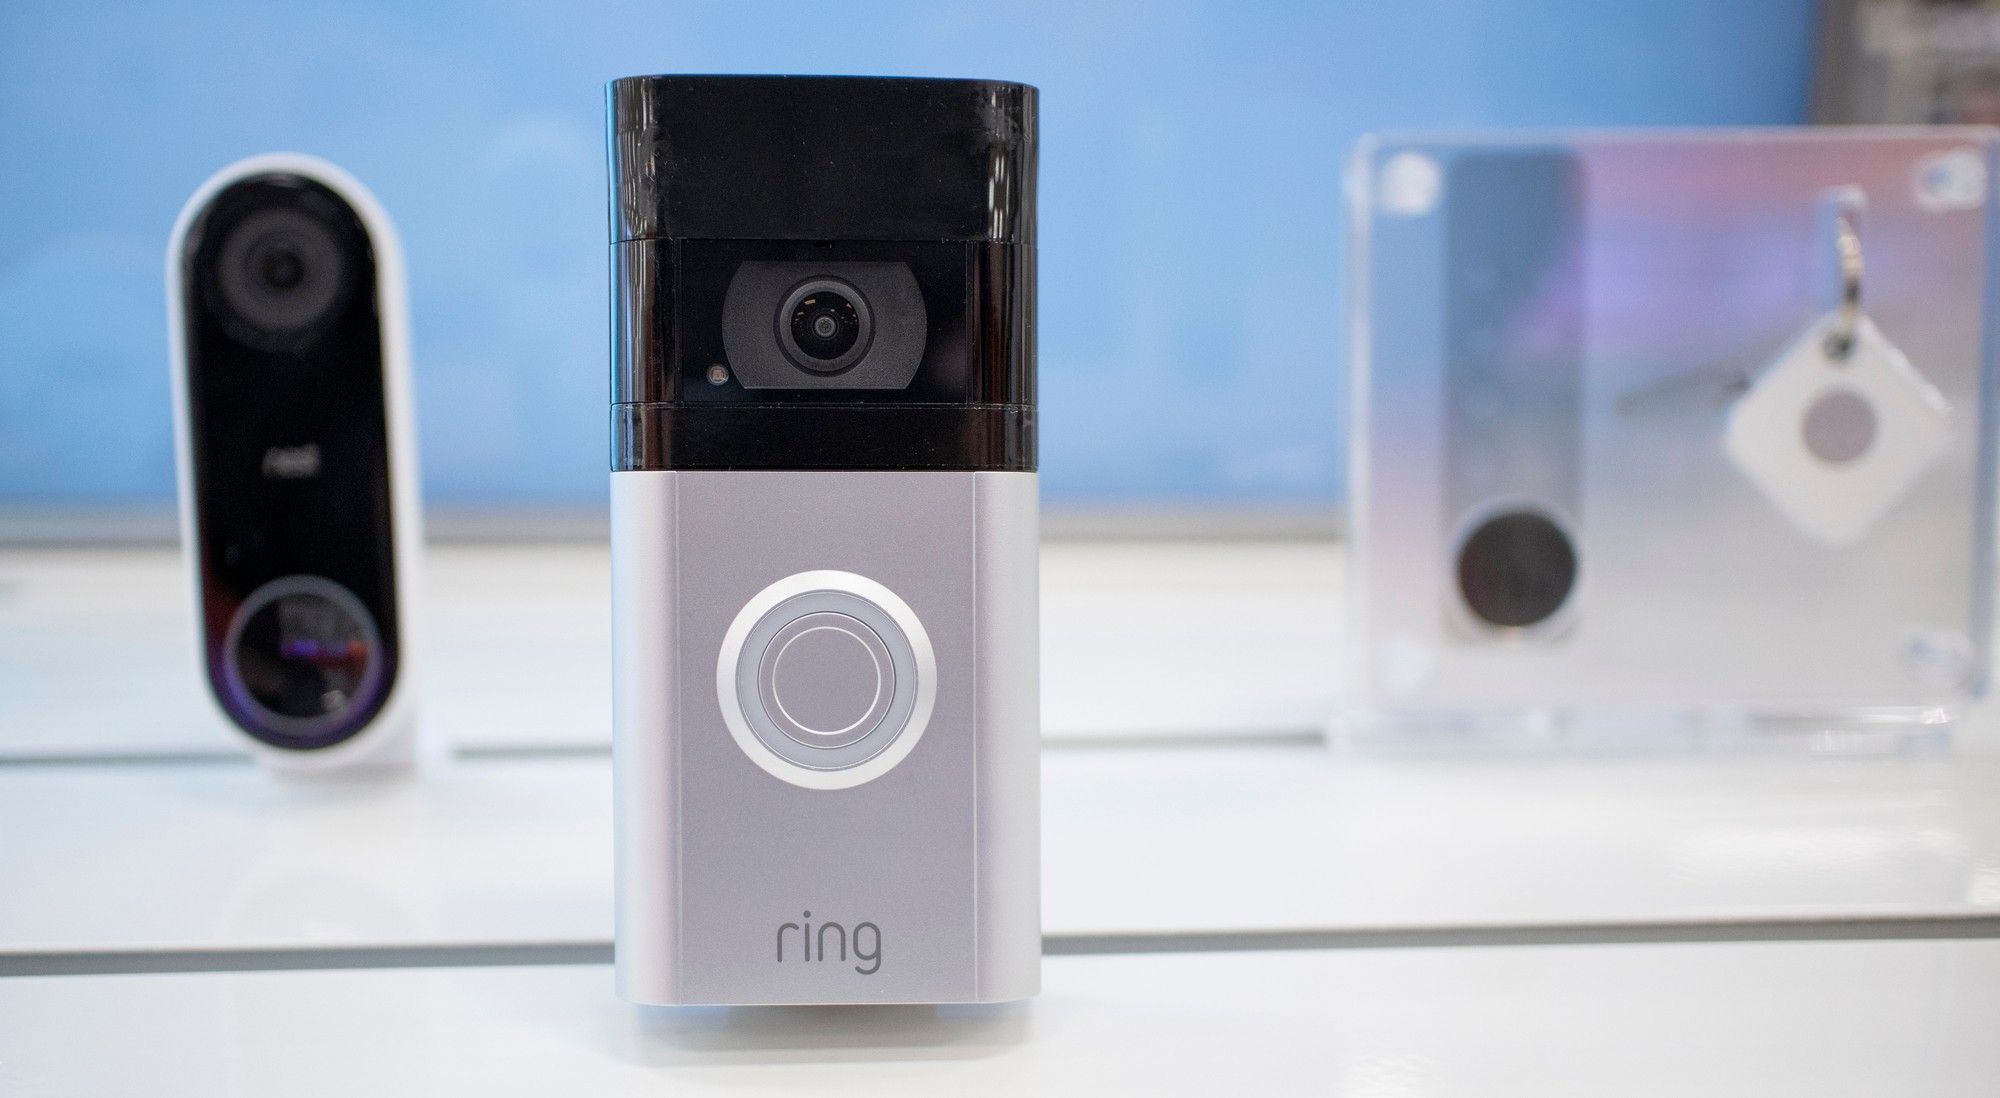 s Ring video surveillance doorbell, explained - Vox